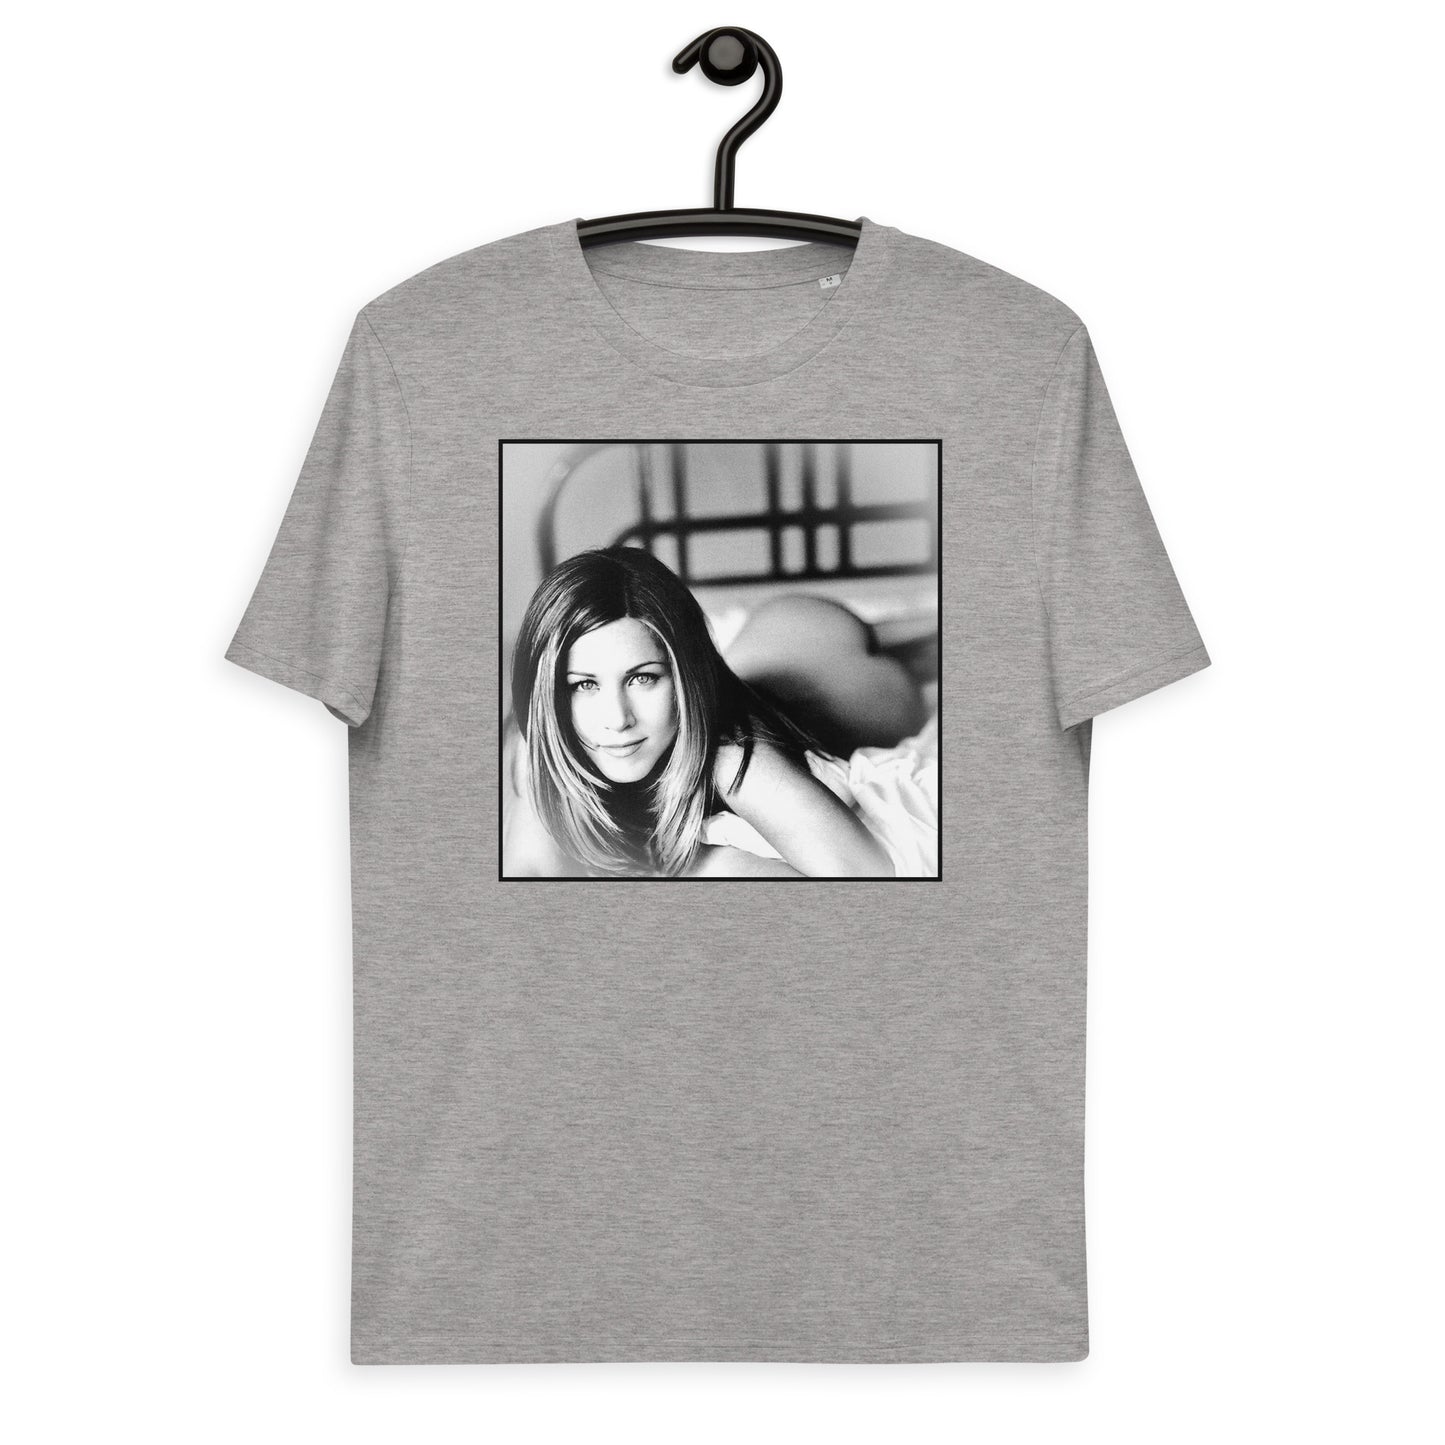 Jennifer Nude KiSS Unisex organic cotton t-shirt - Friends Rachel Green Aniston